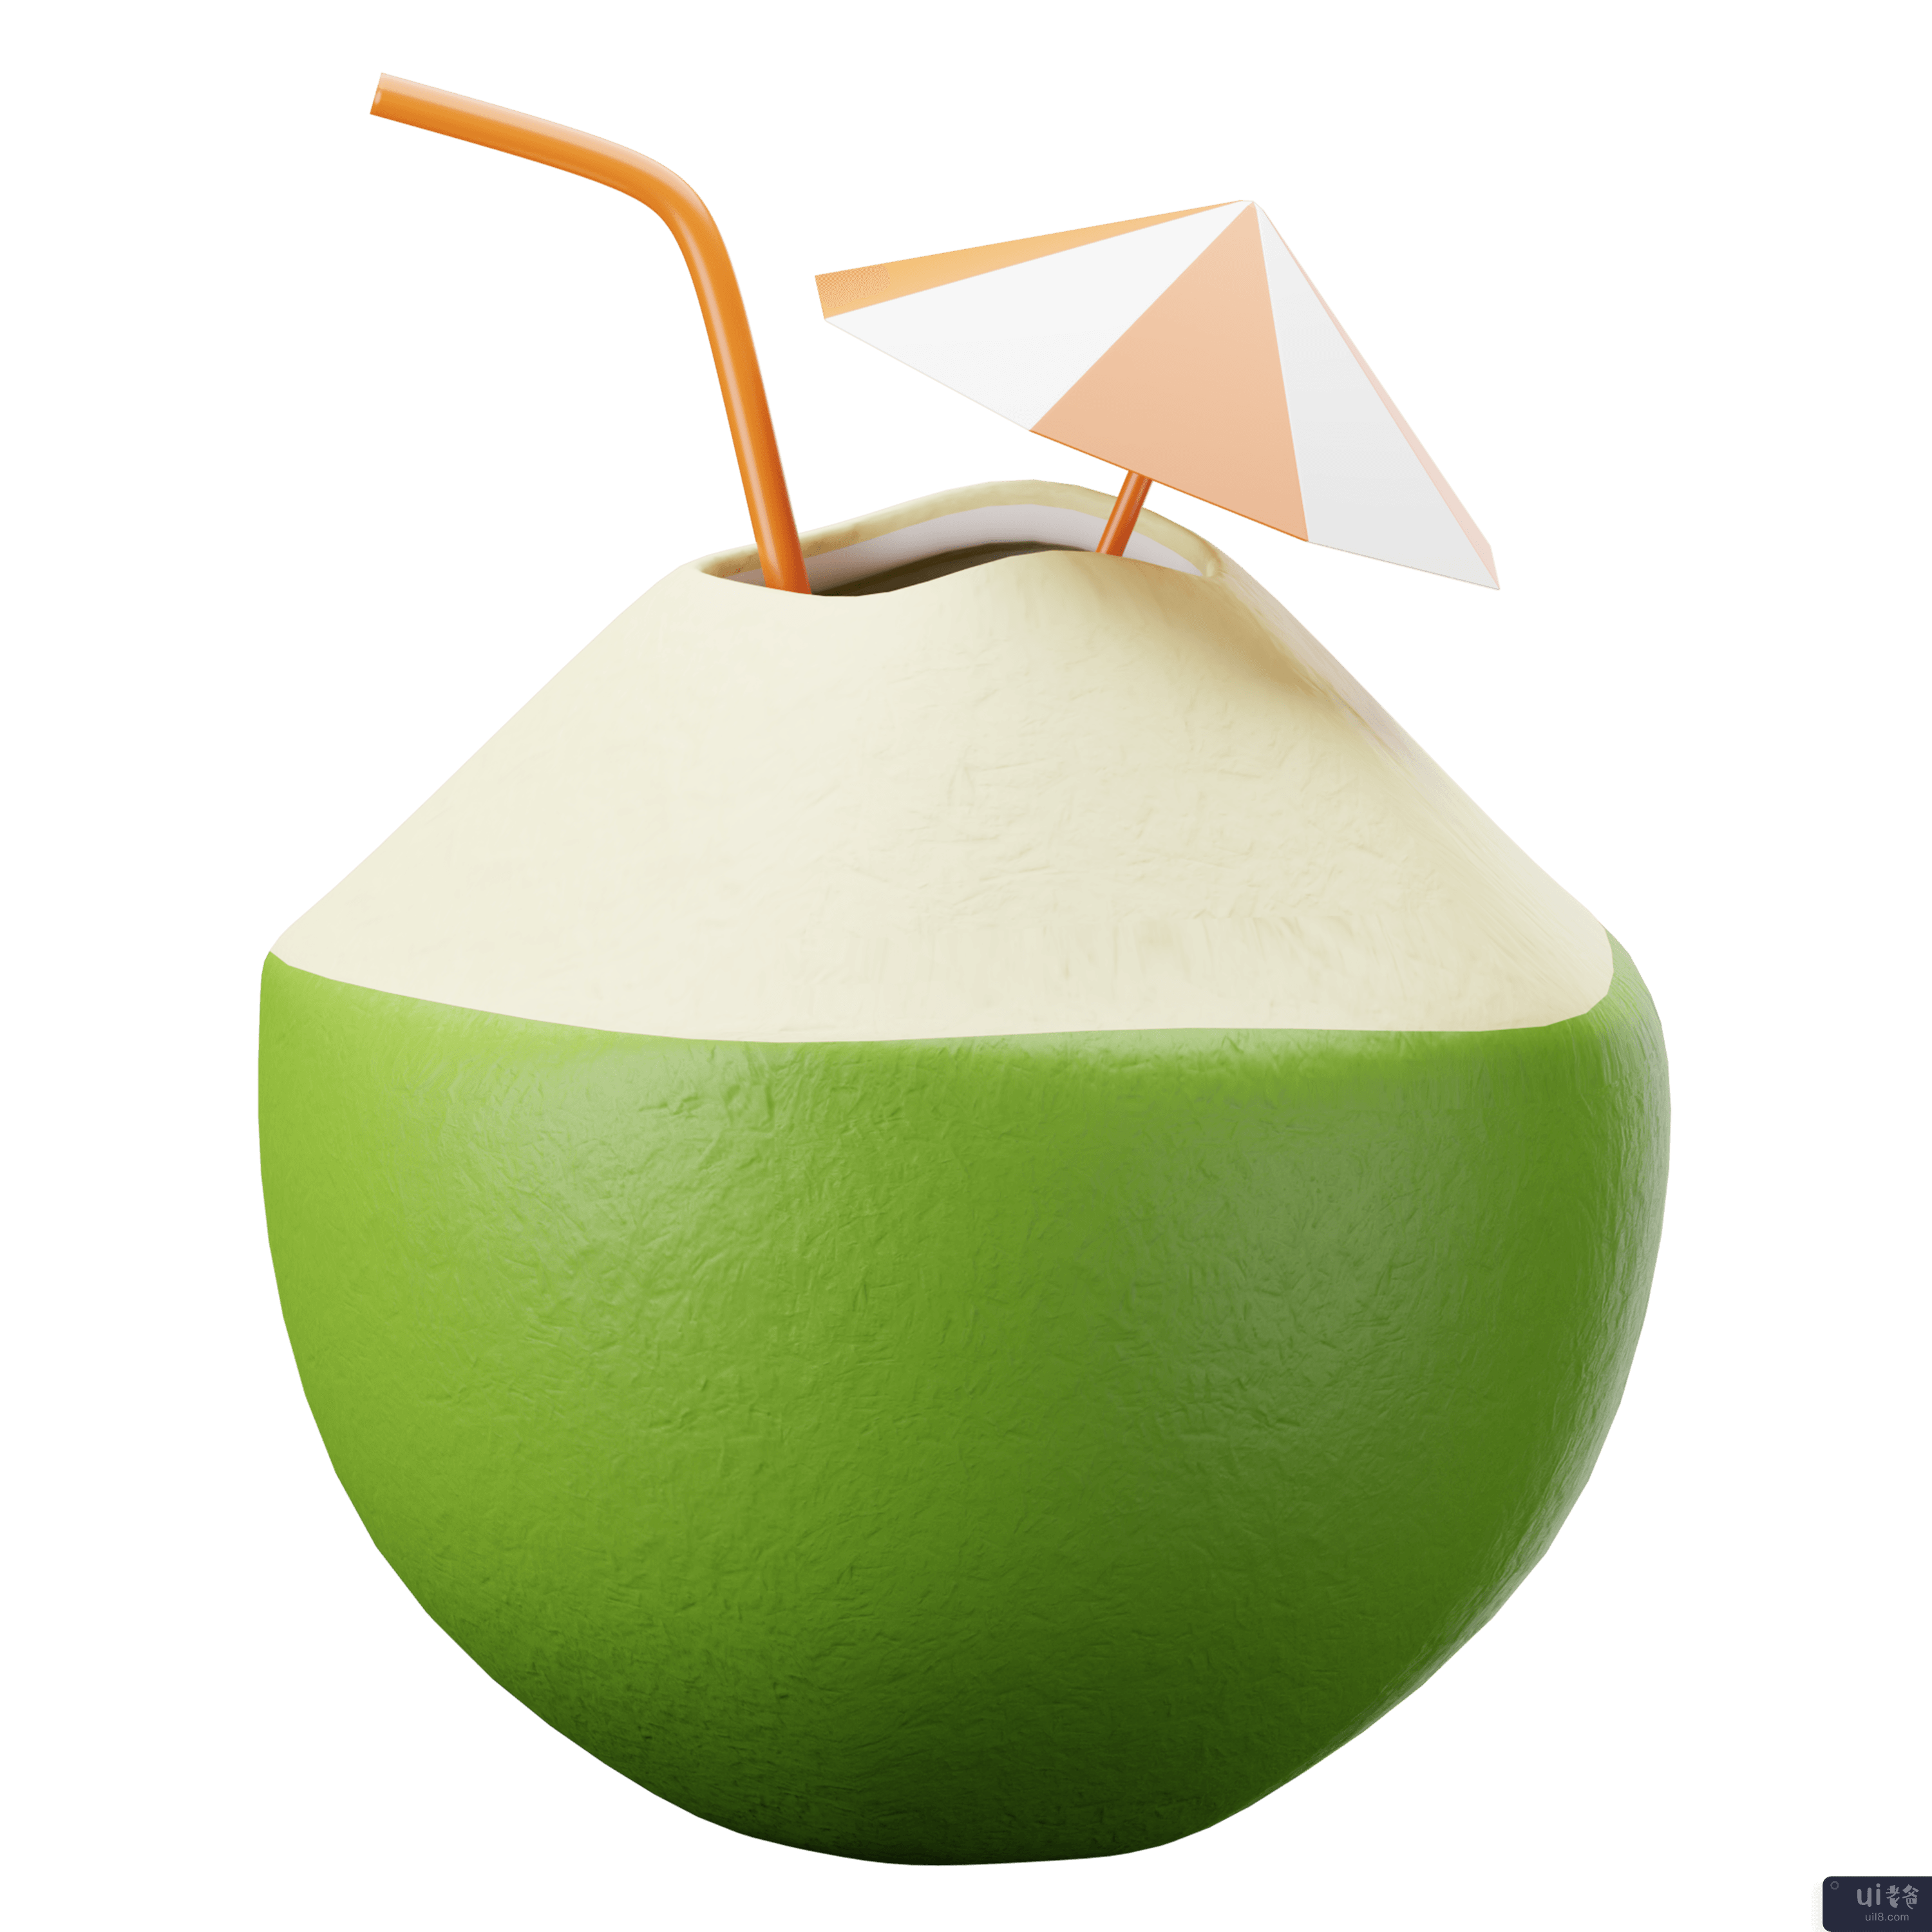 3D 旅行和假期插图包 - 椰子汁(3D Travel and Holidays Illustration Pack - Coconut Juice)插图